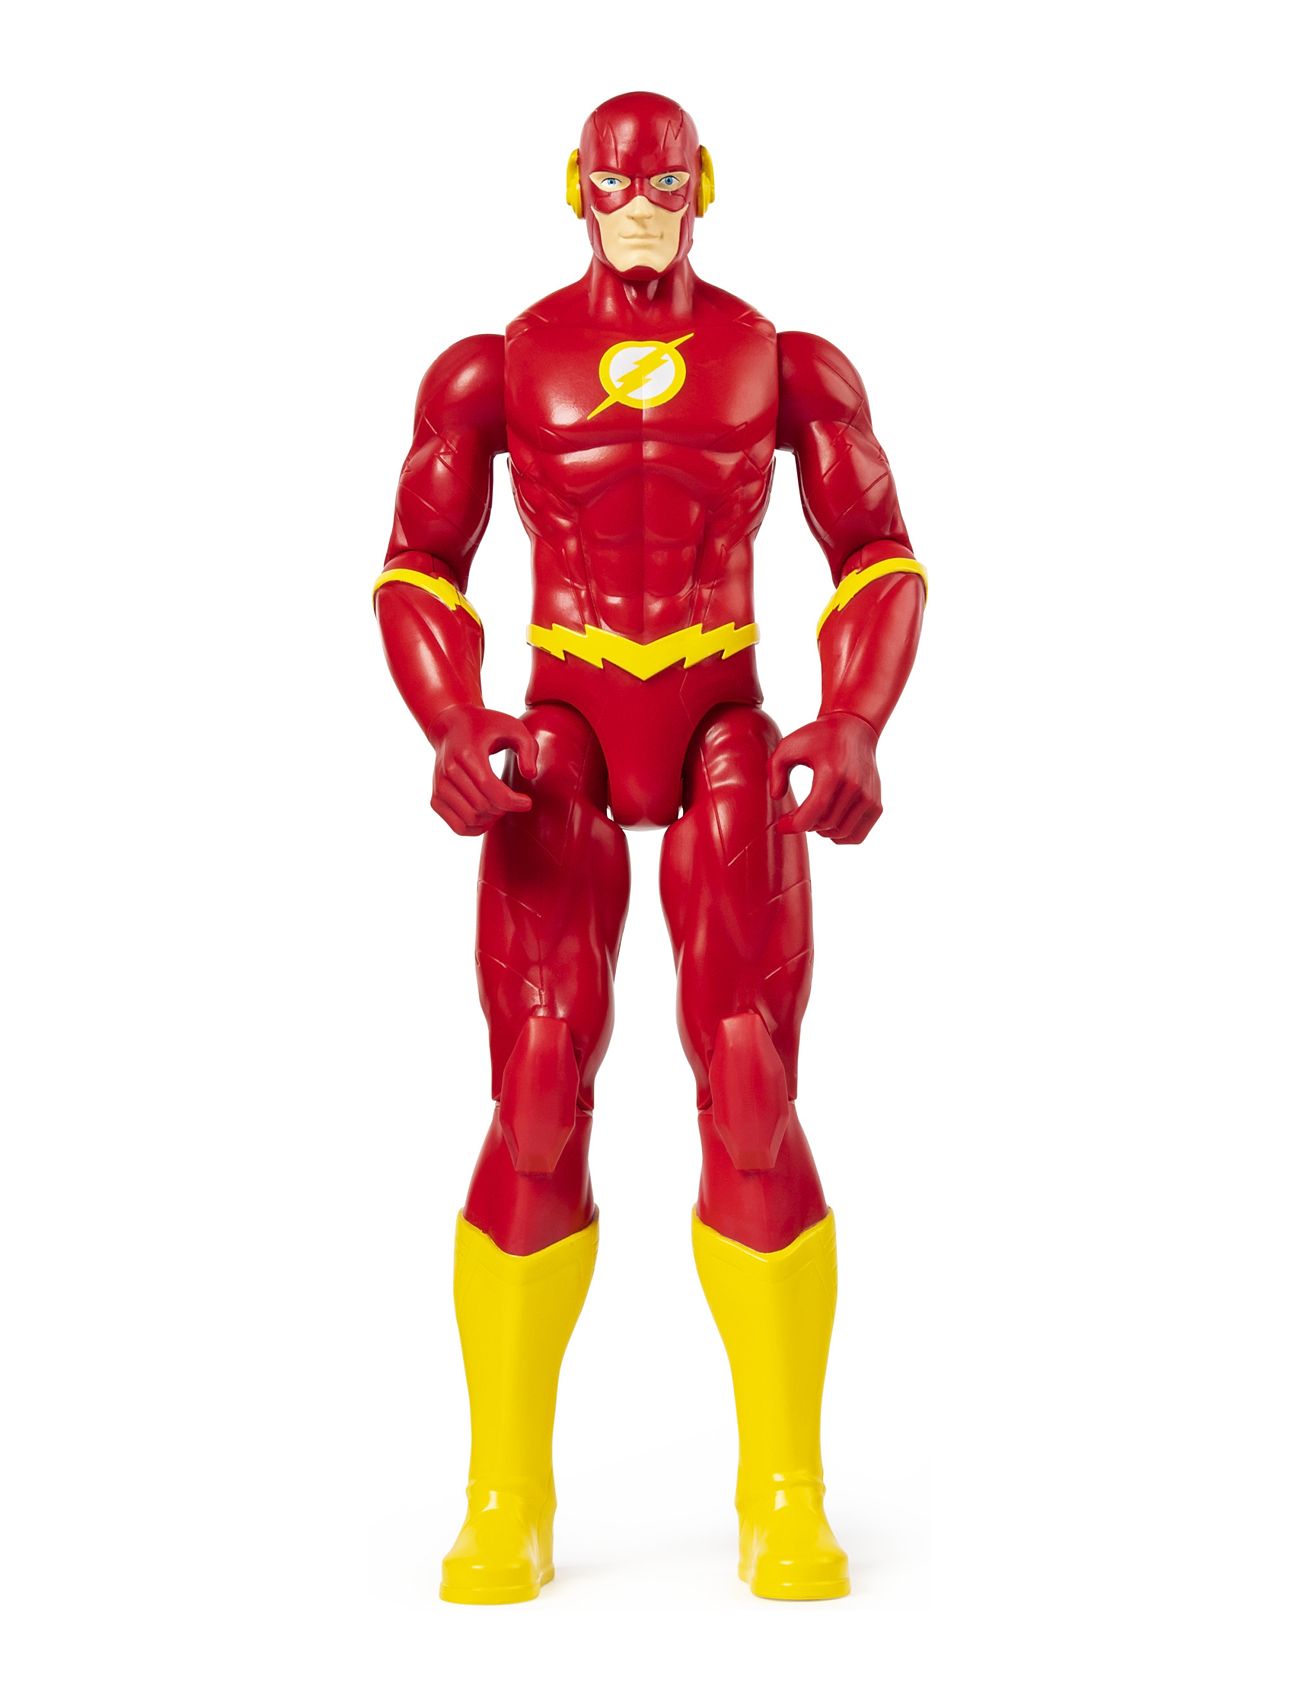 Dc 30 Cm Figure Flash Toys Playsets & Action Figures Action Figures Multi/patterned DC Super Heroes